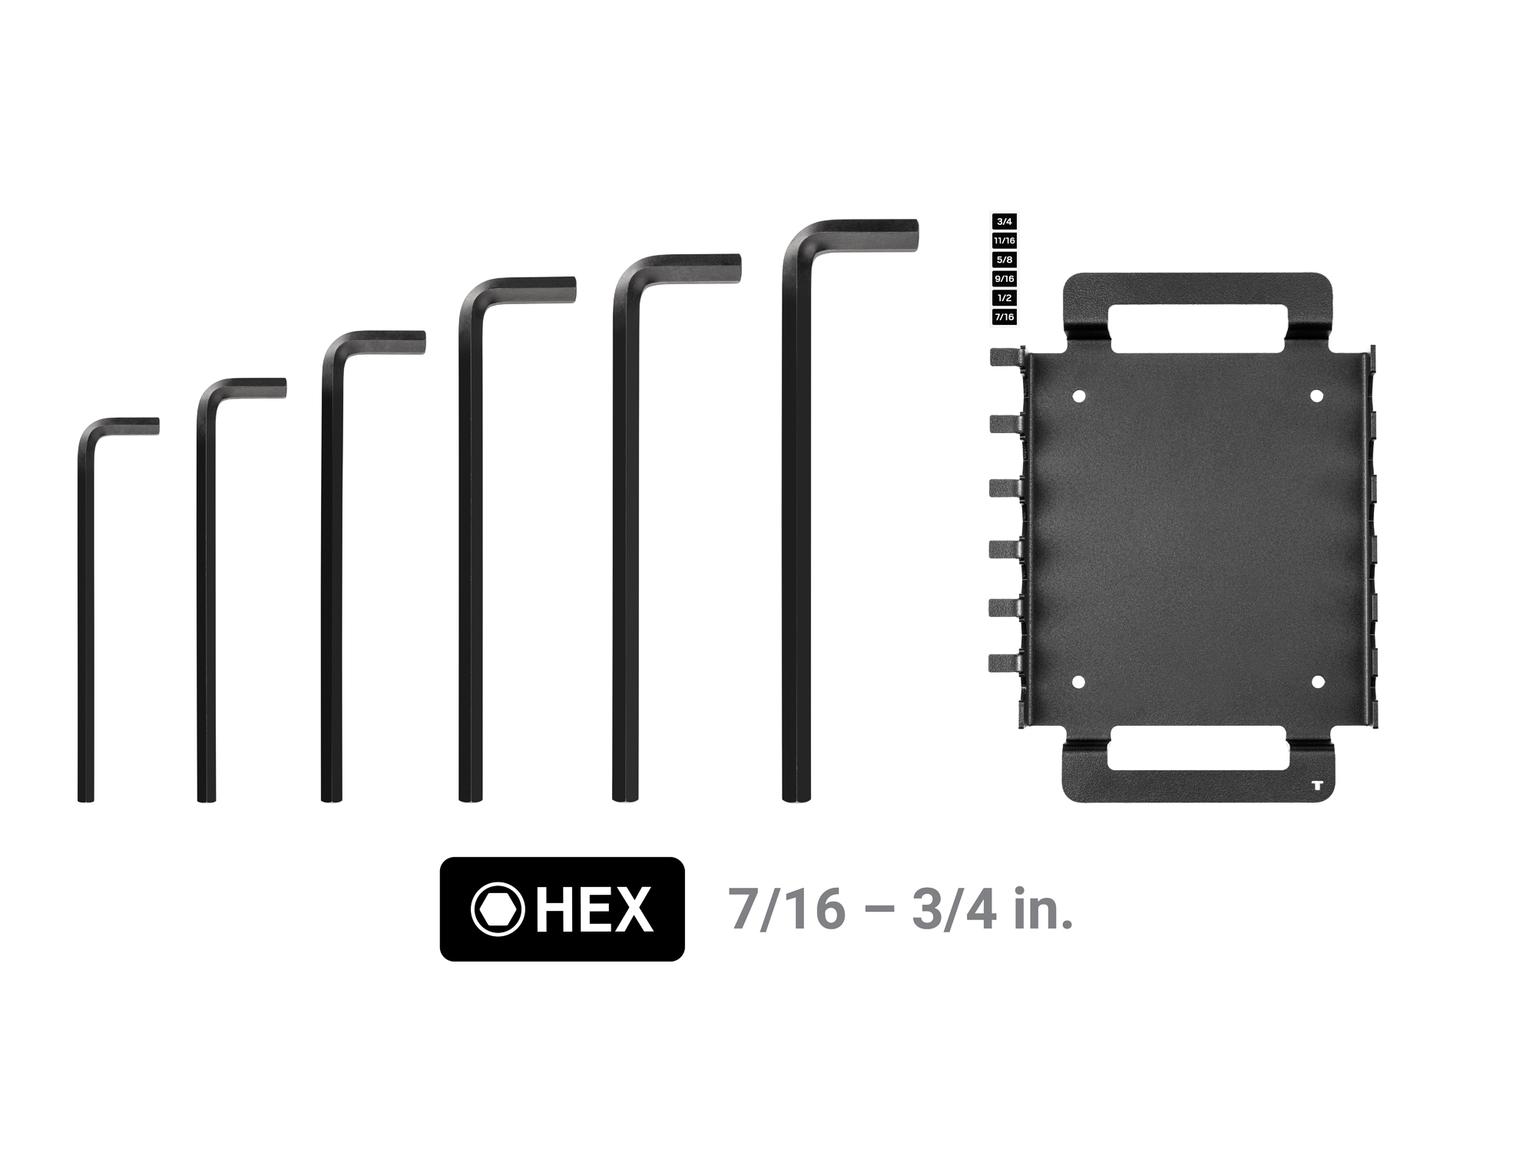 TEKTON KLX92101-T Flat End Hex L-Key Set with Rack, 6-Piece (7/16-3/4 in.)